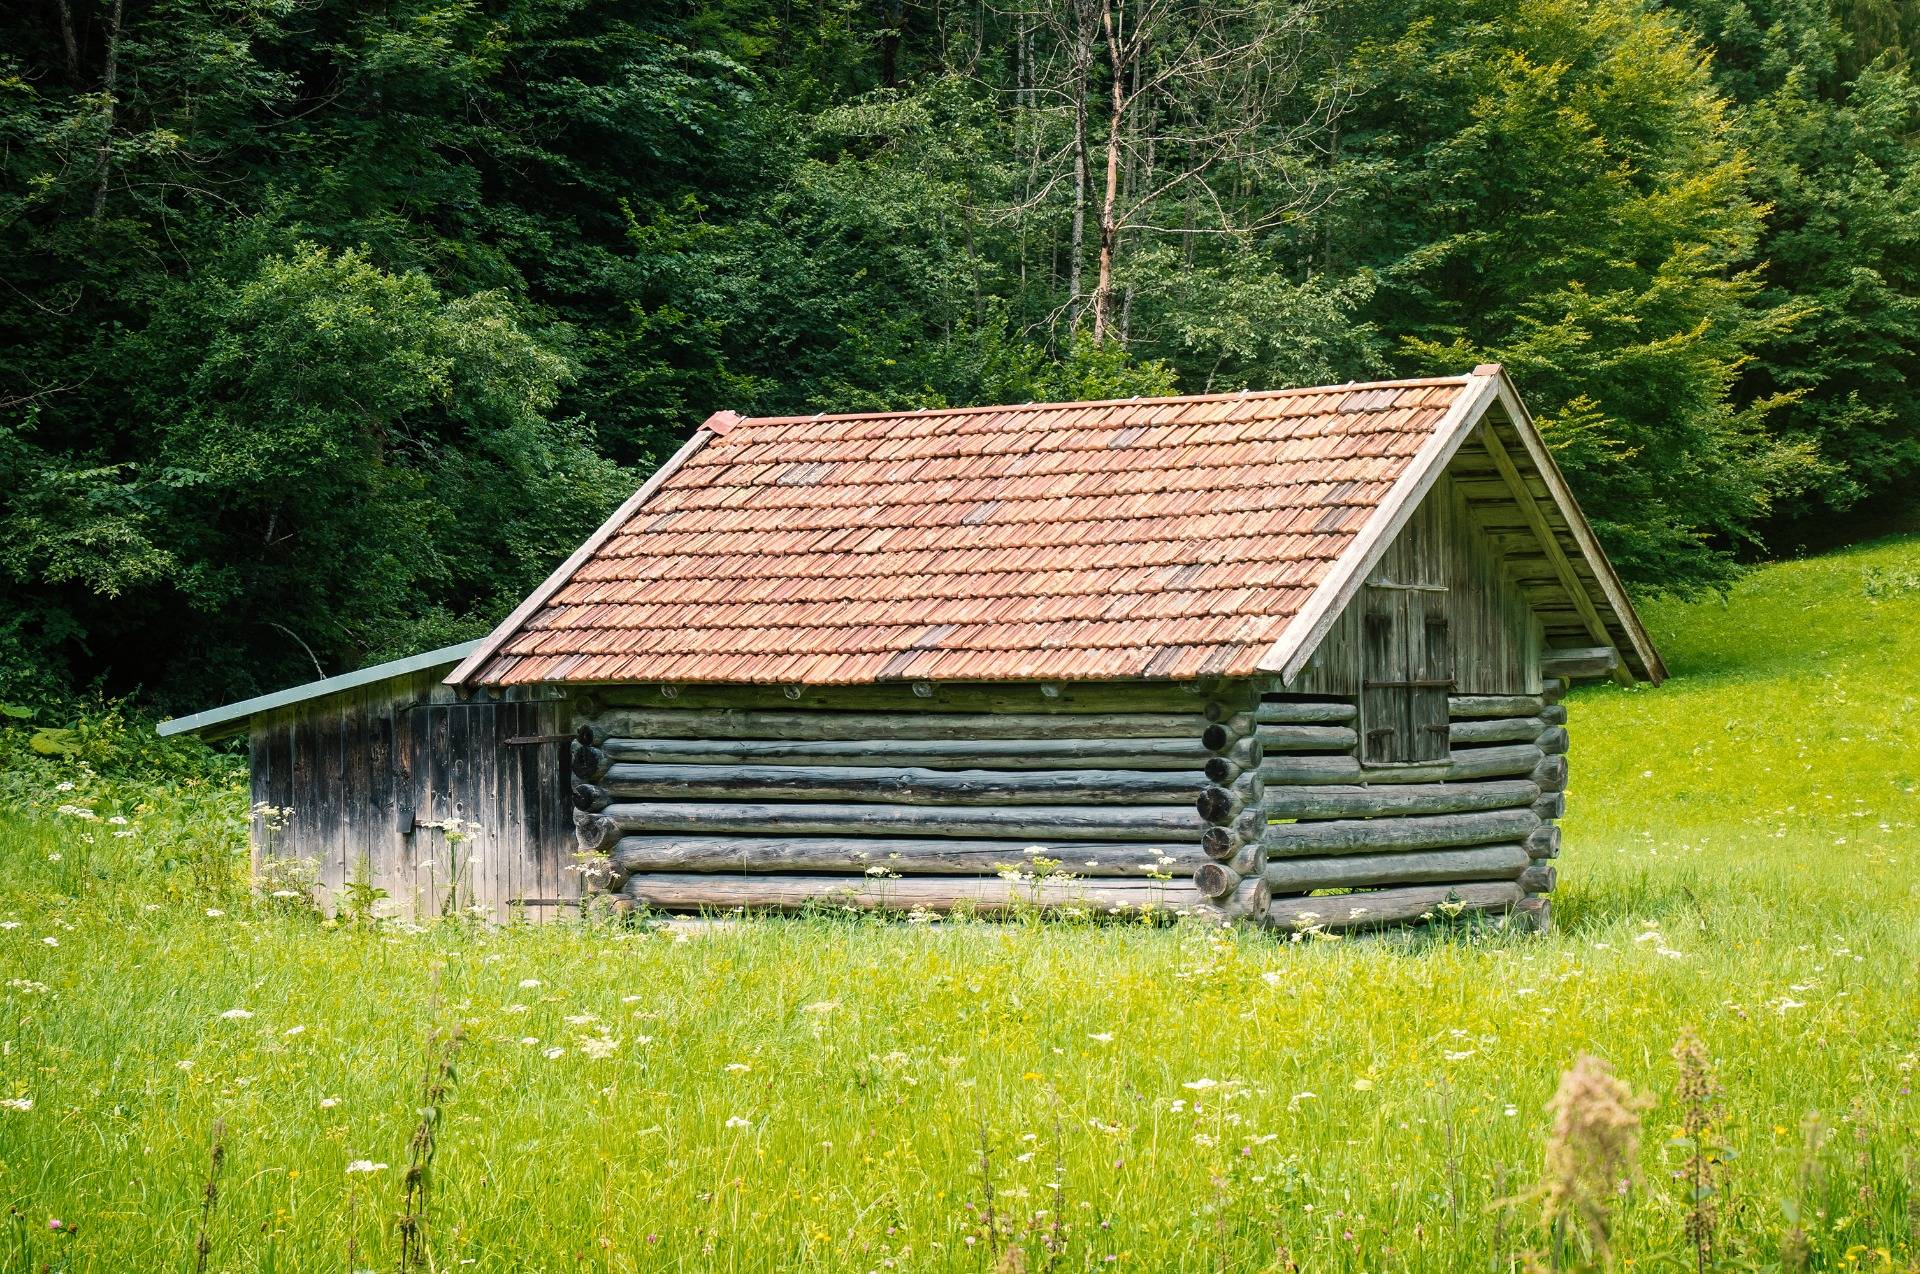 Beautiful wooden hut in the allgau region